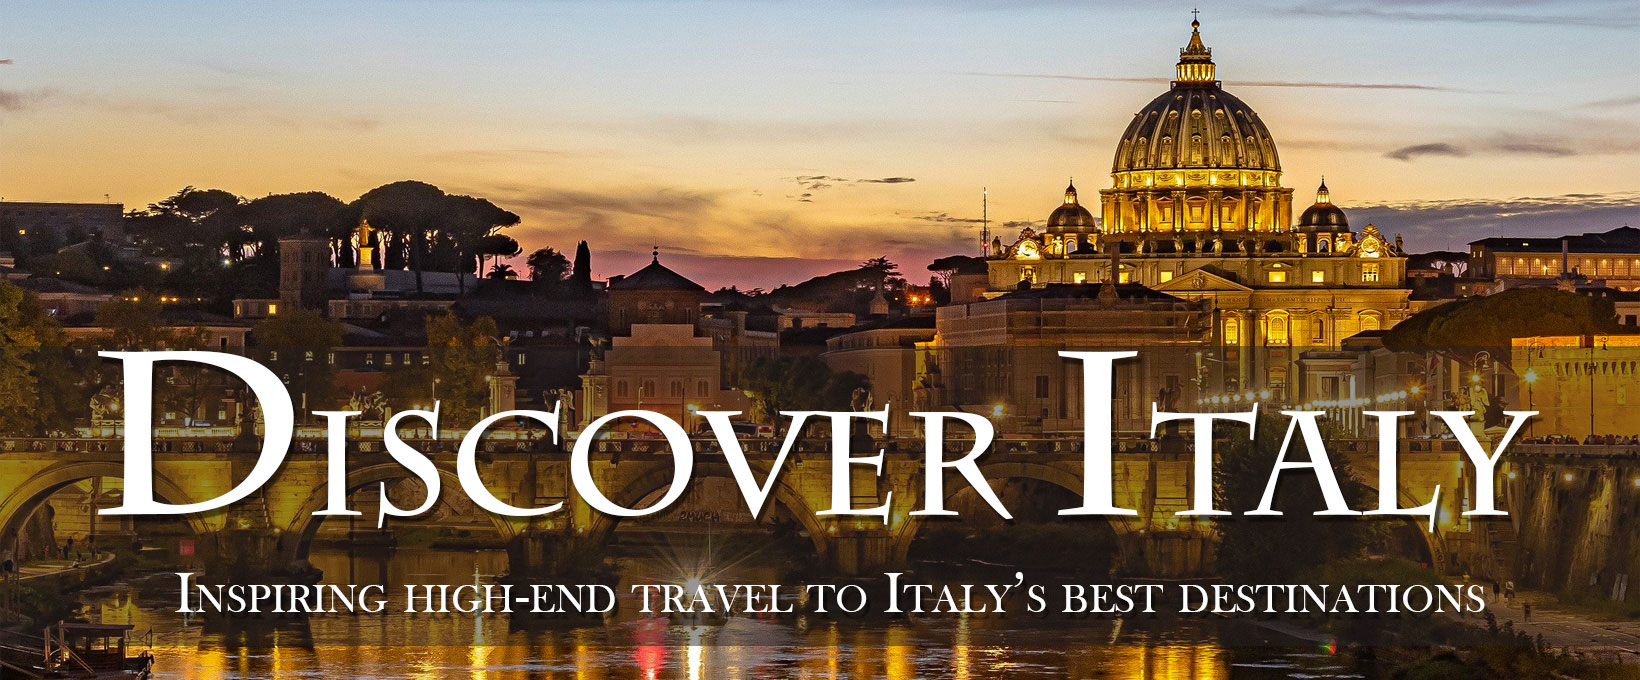 Facebook-Cover-Italy2